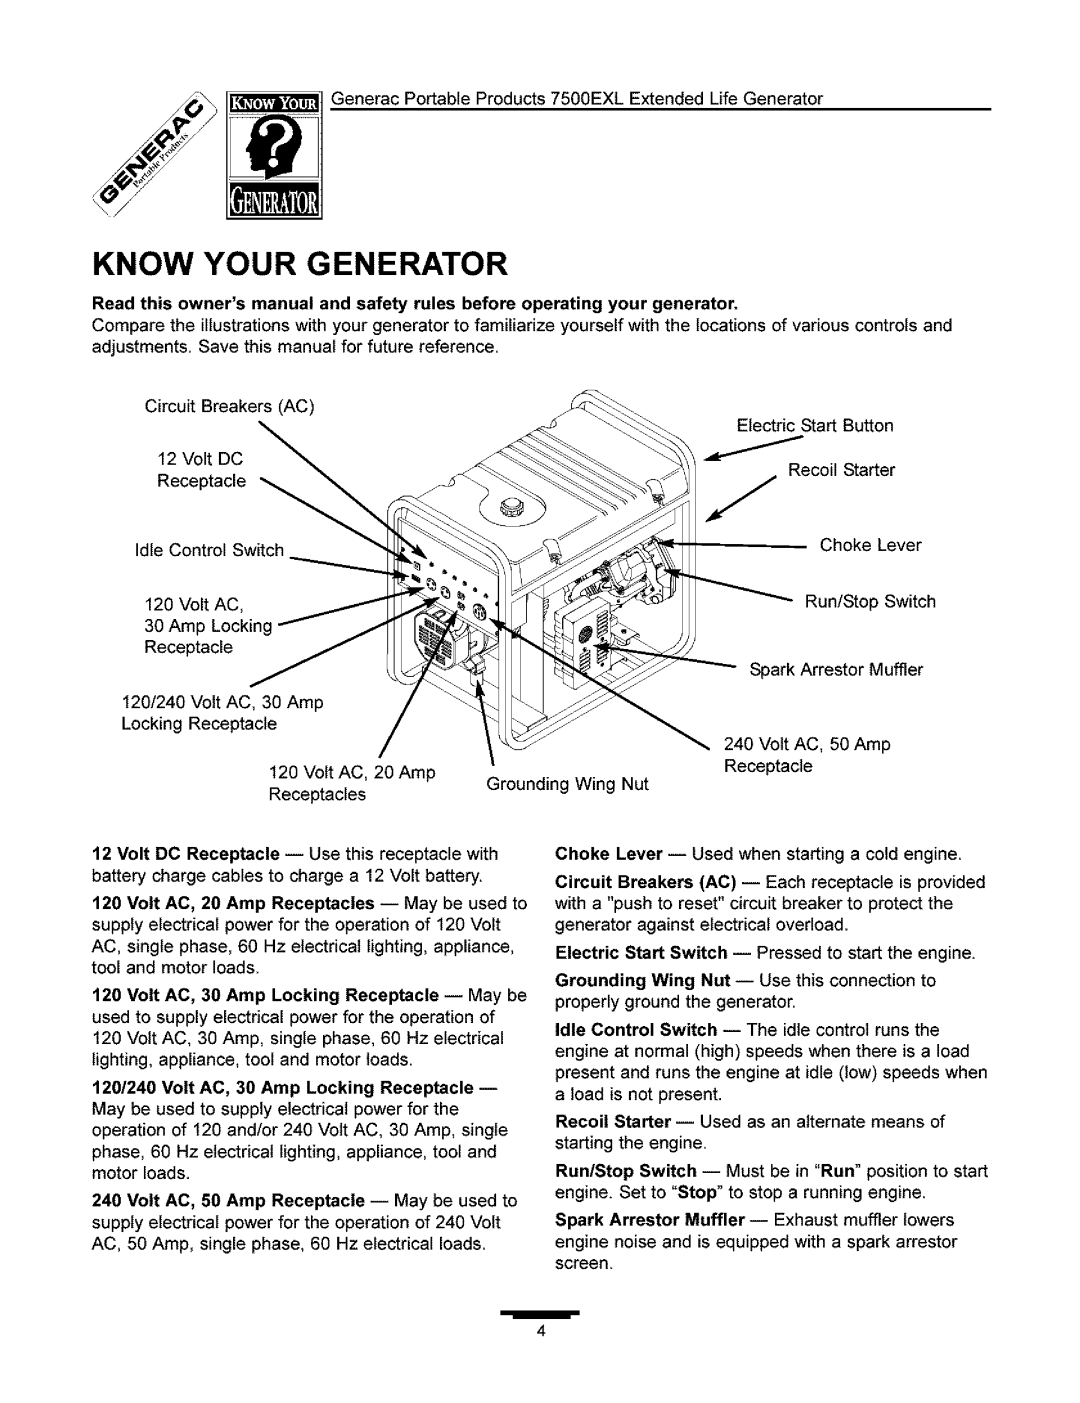 Generac 7500 owner manual Know Your Generator 